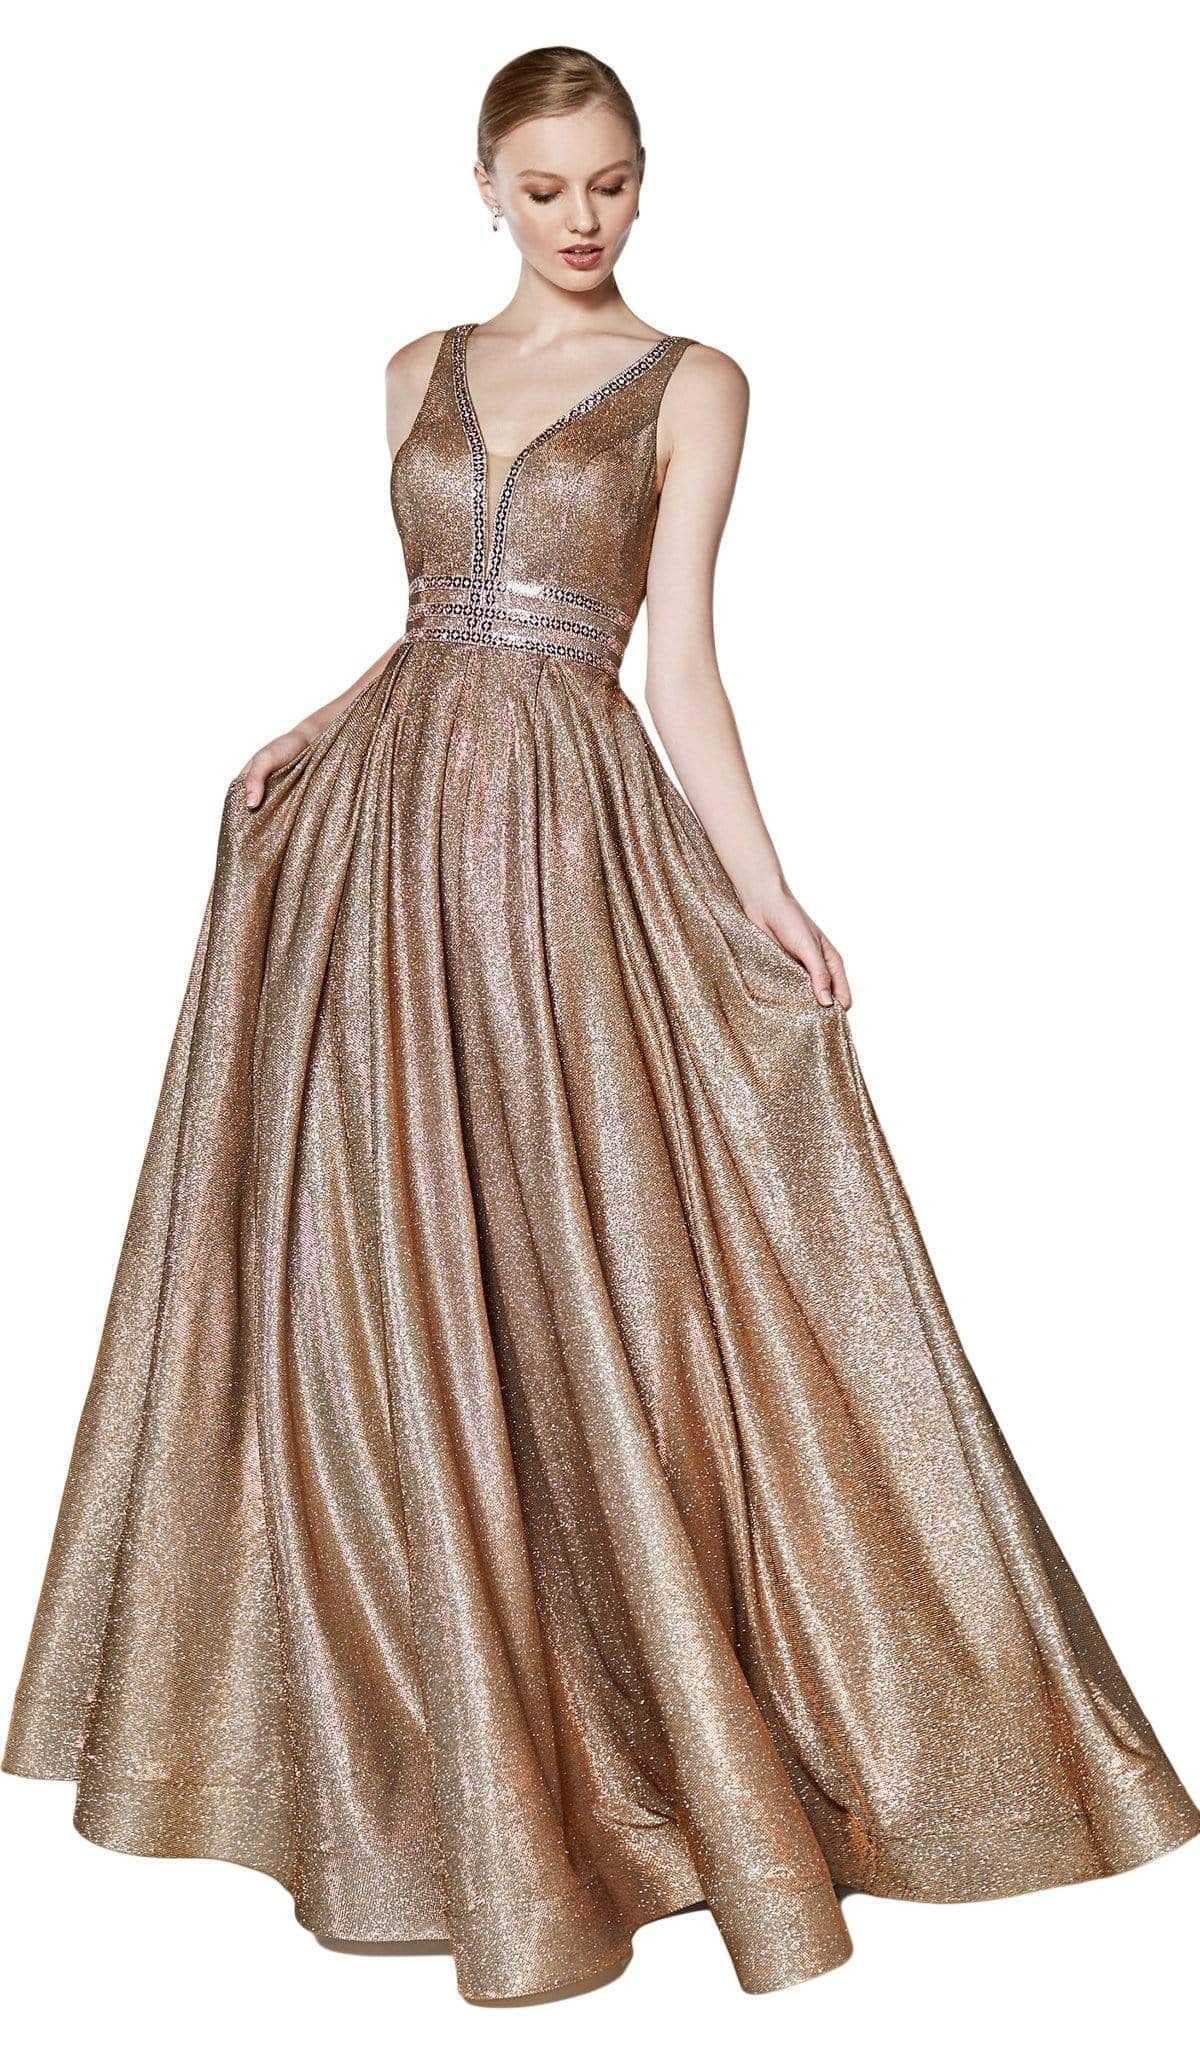 Cinderella Divine, Cinderella Divine - Metallic Plunging V-Neck Evening Gown CJ505 - 1 pc Copper In Size 10 Available